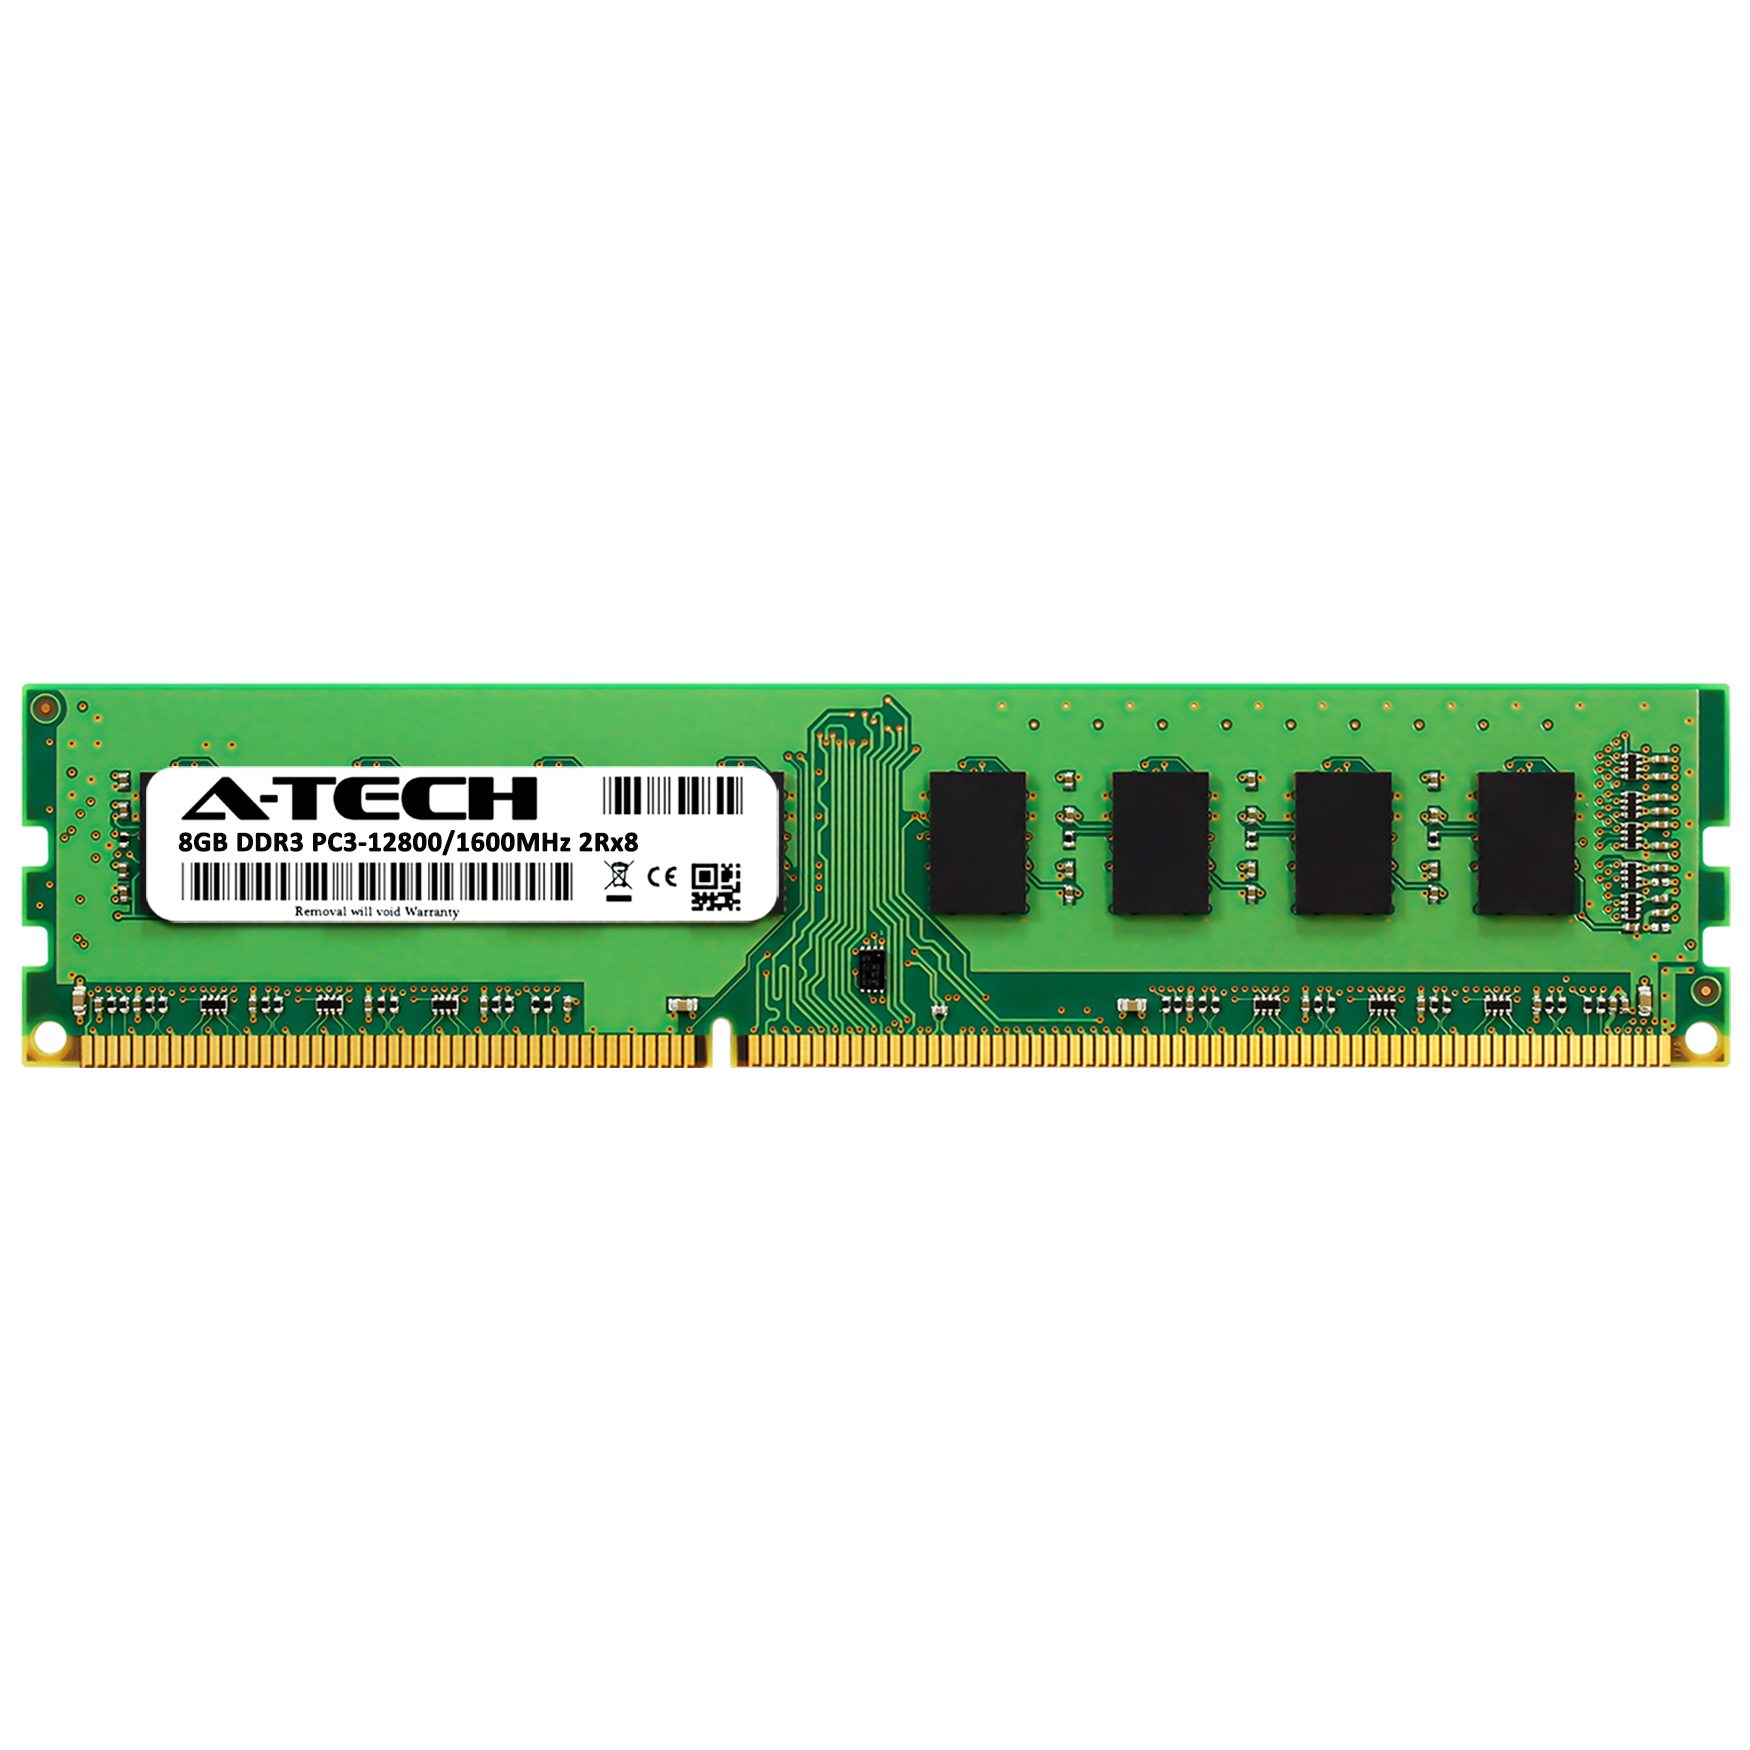 8GB PC3-12800 DDR3 1600 MHz DIMM Memory RAM for GIGABYTE GA-H81M-S2PV | eBay